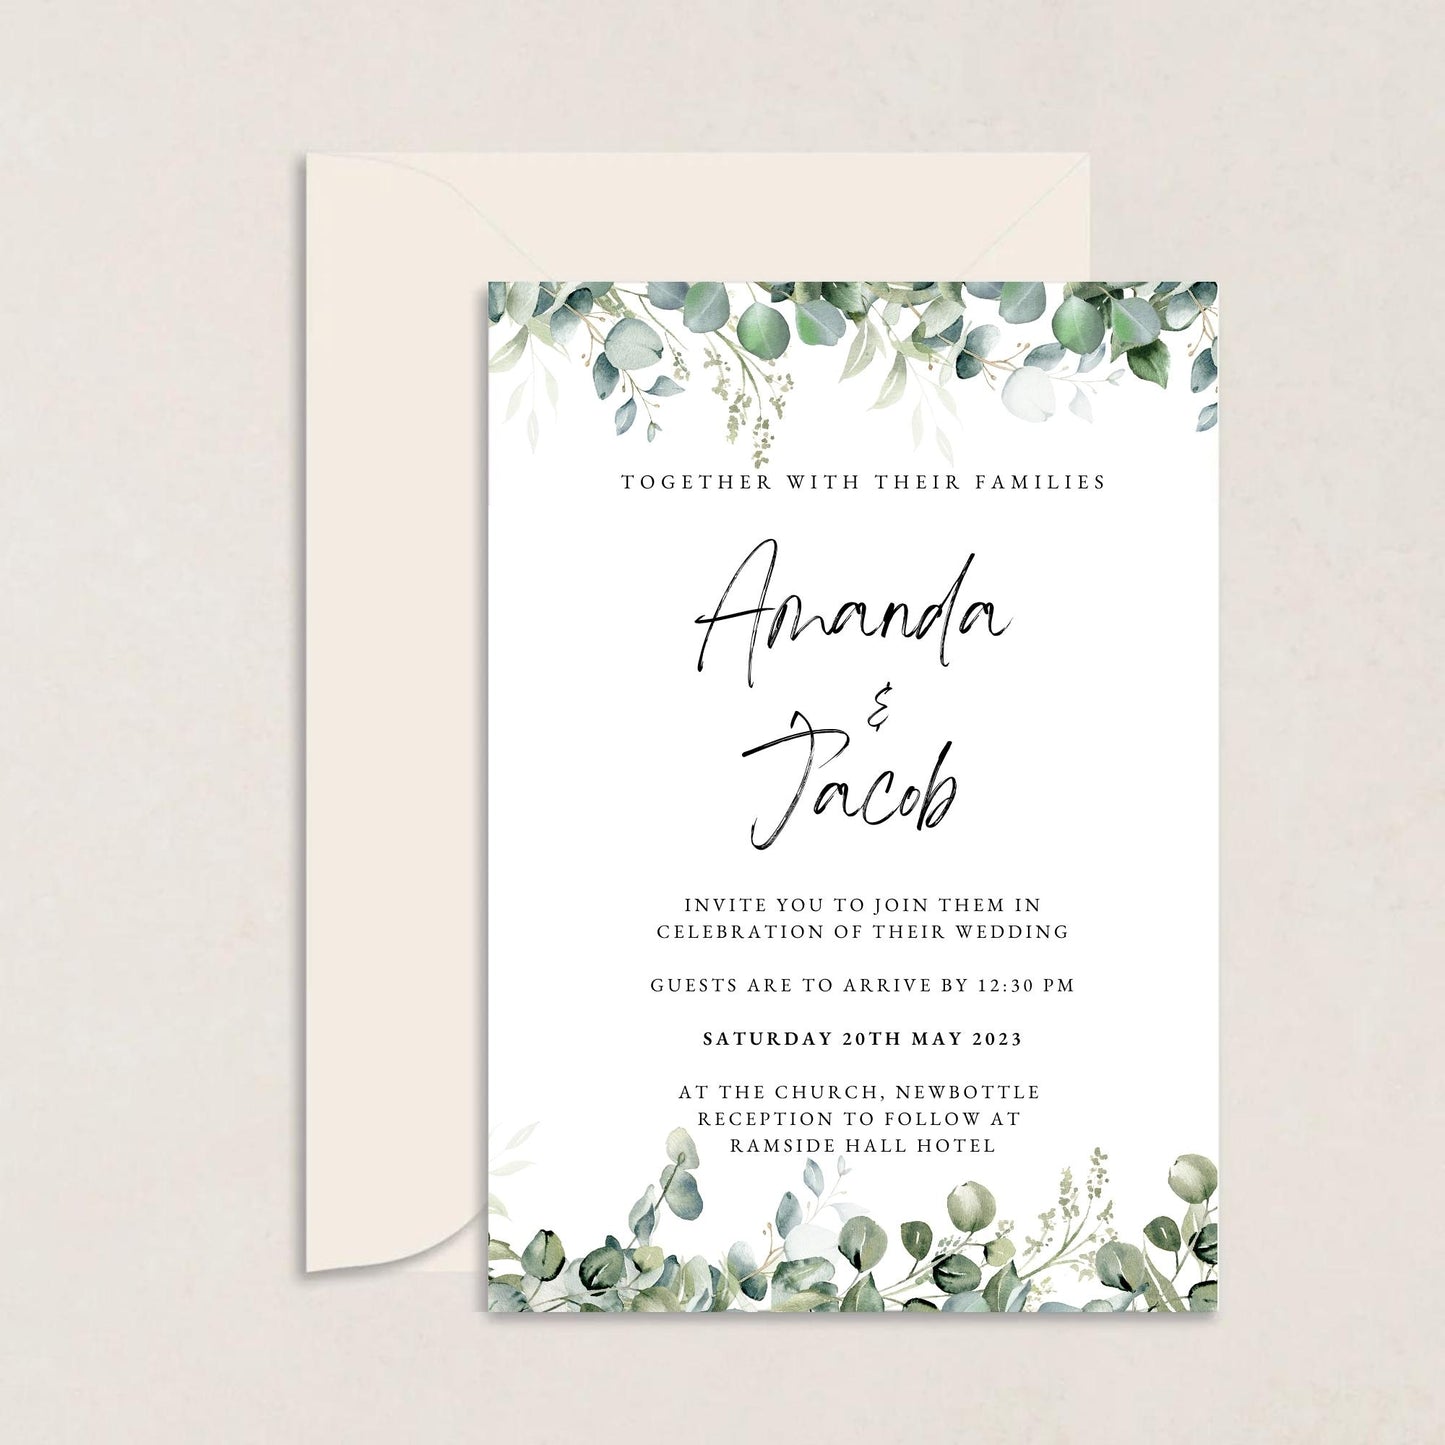 AMANDA Wedding Invitations - Wedding Invitations available at The Ivy Collection | Luxury Wedding Stationery